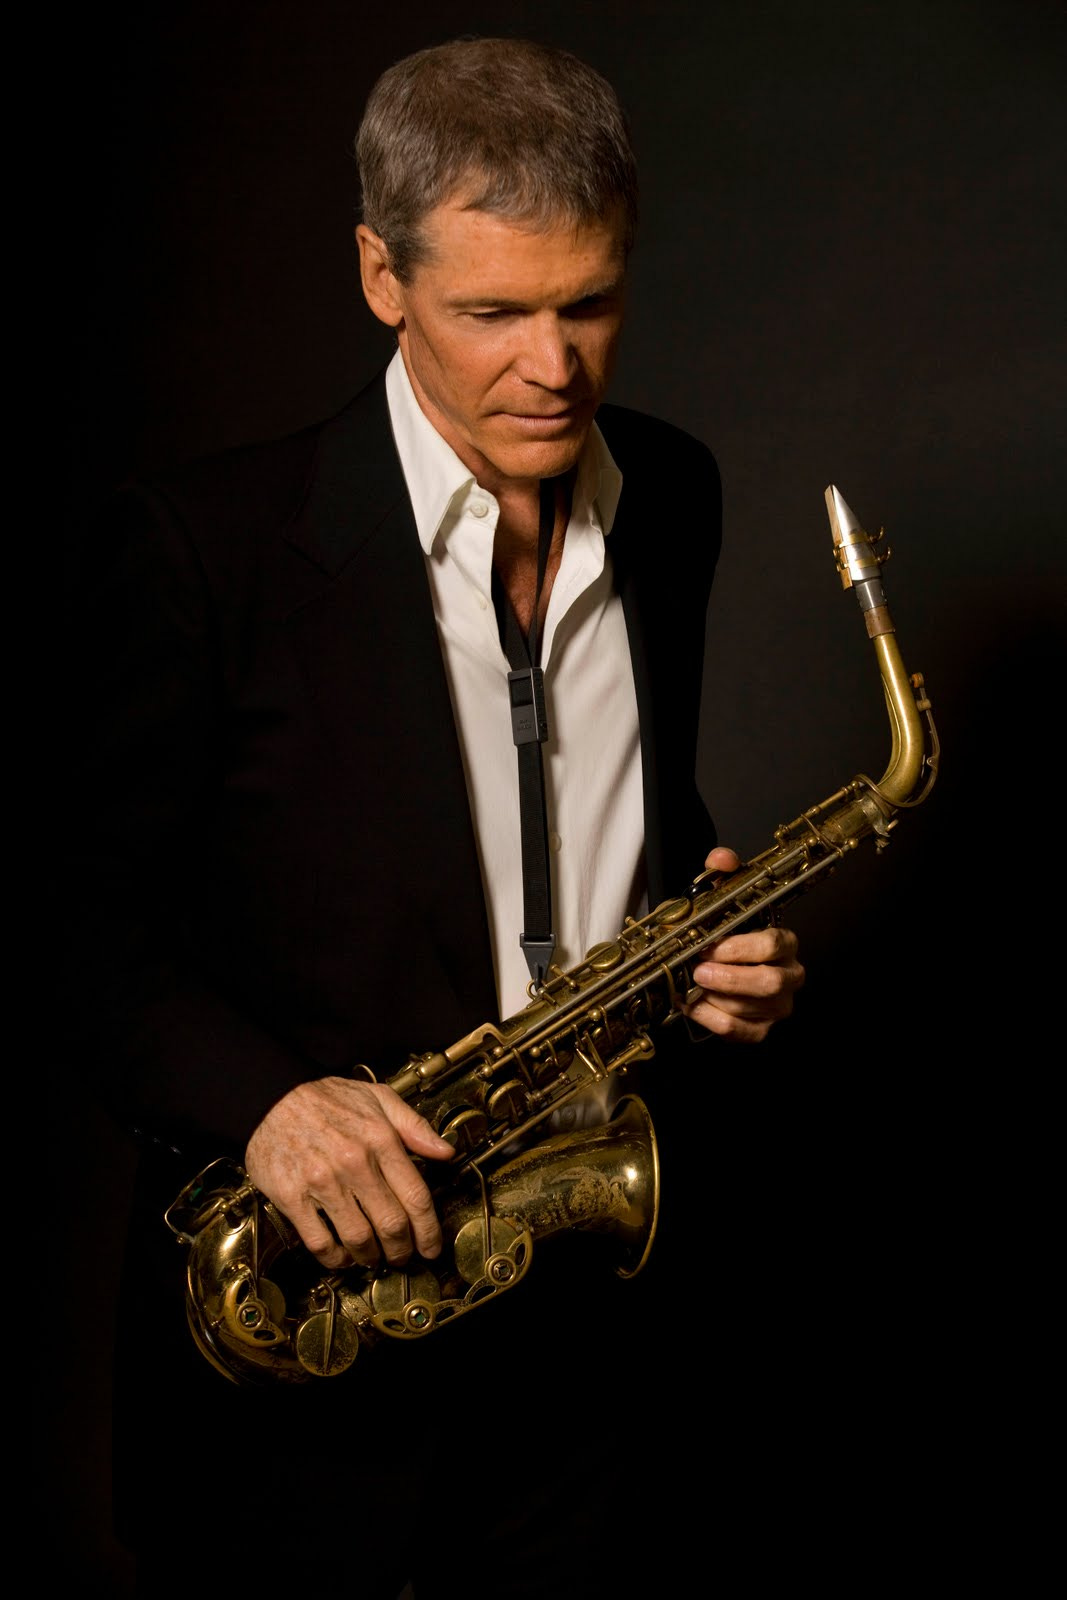 Image of David Sanborn courtesy of St. Louis Jazz Notes blog